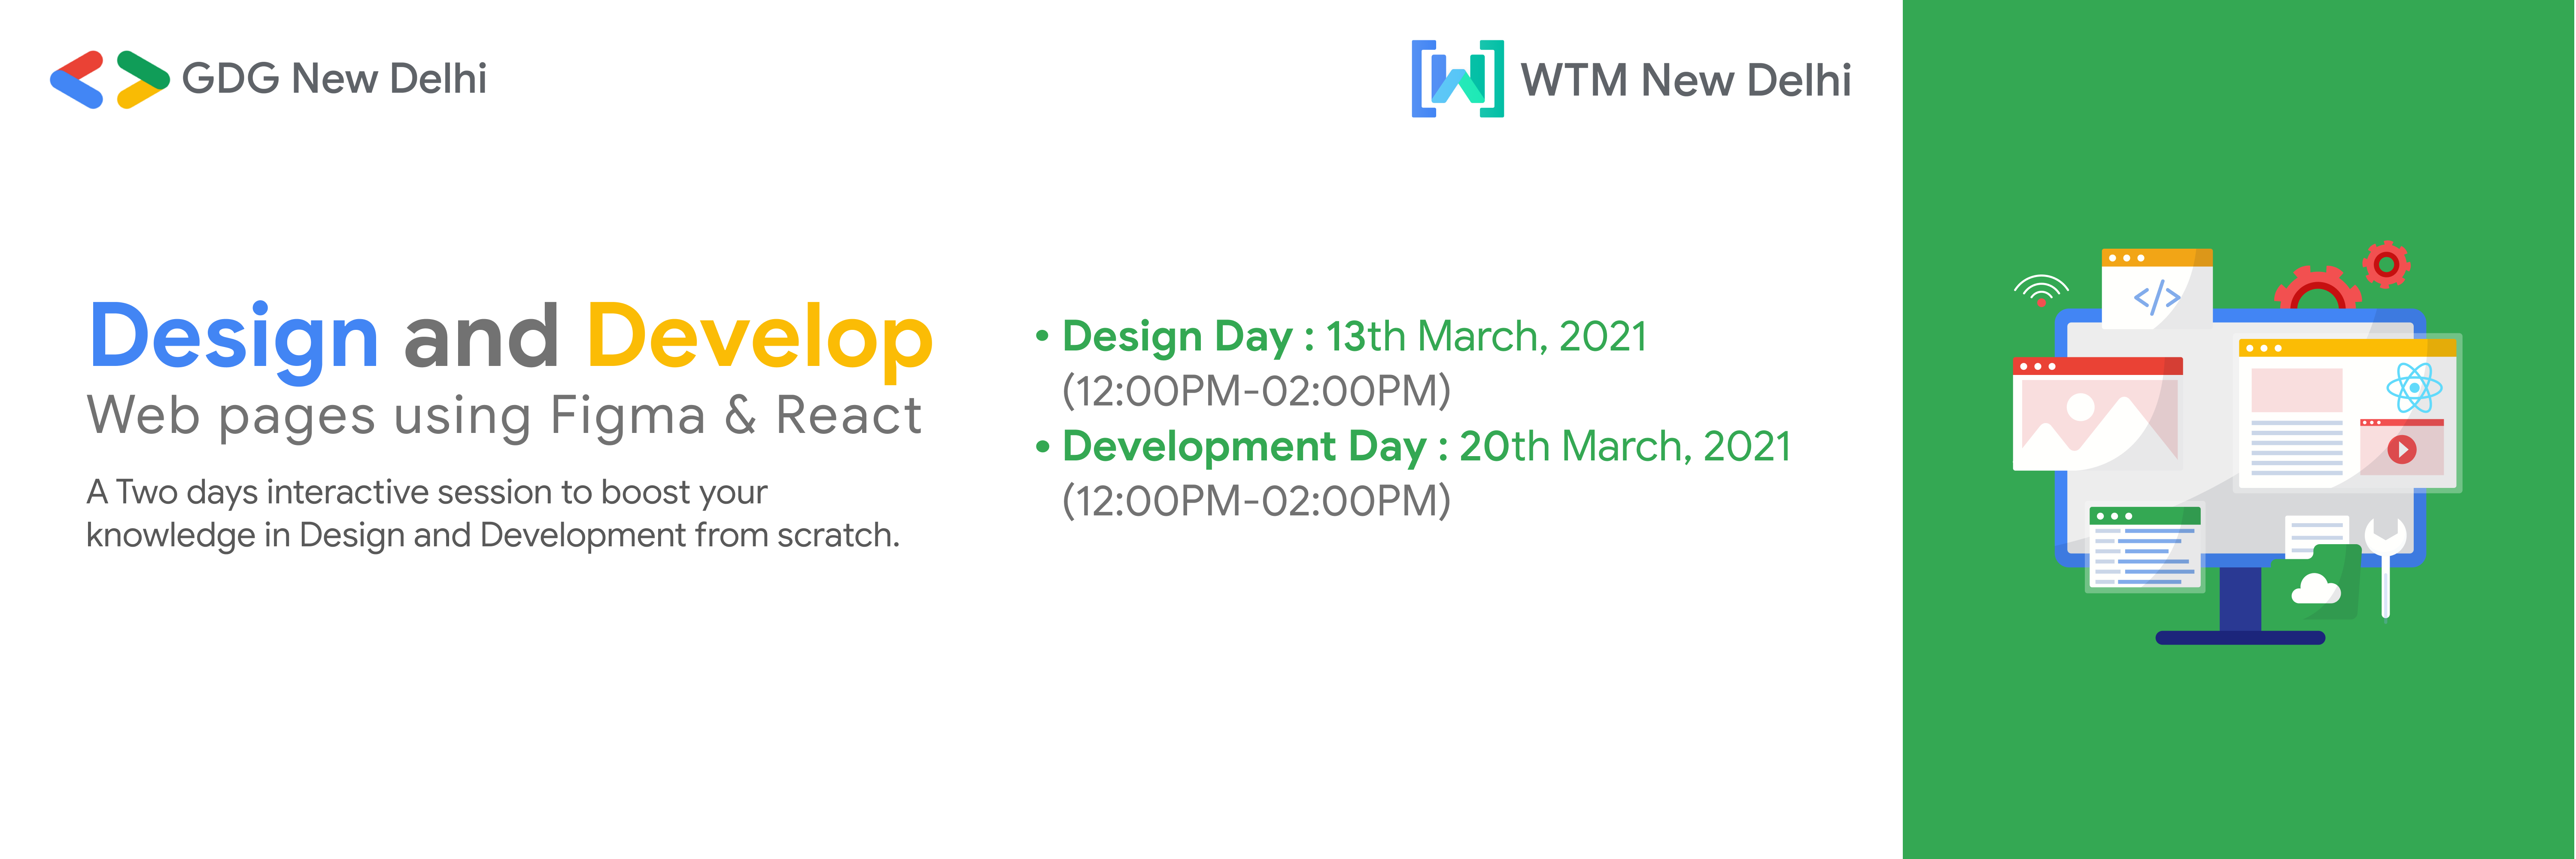 Developer Days: Design & Develop